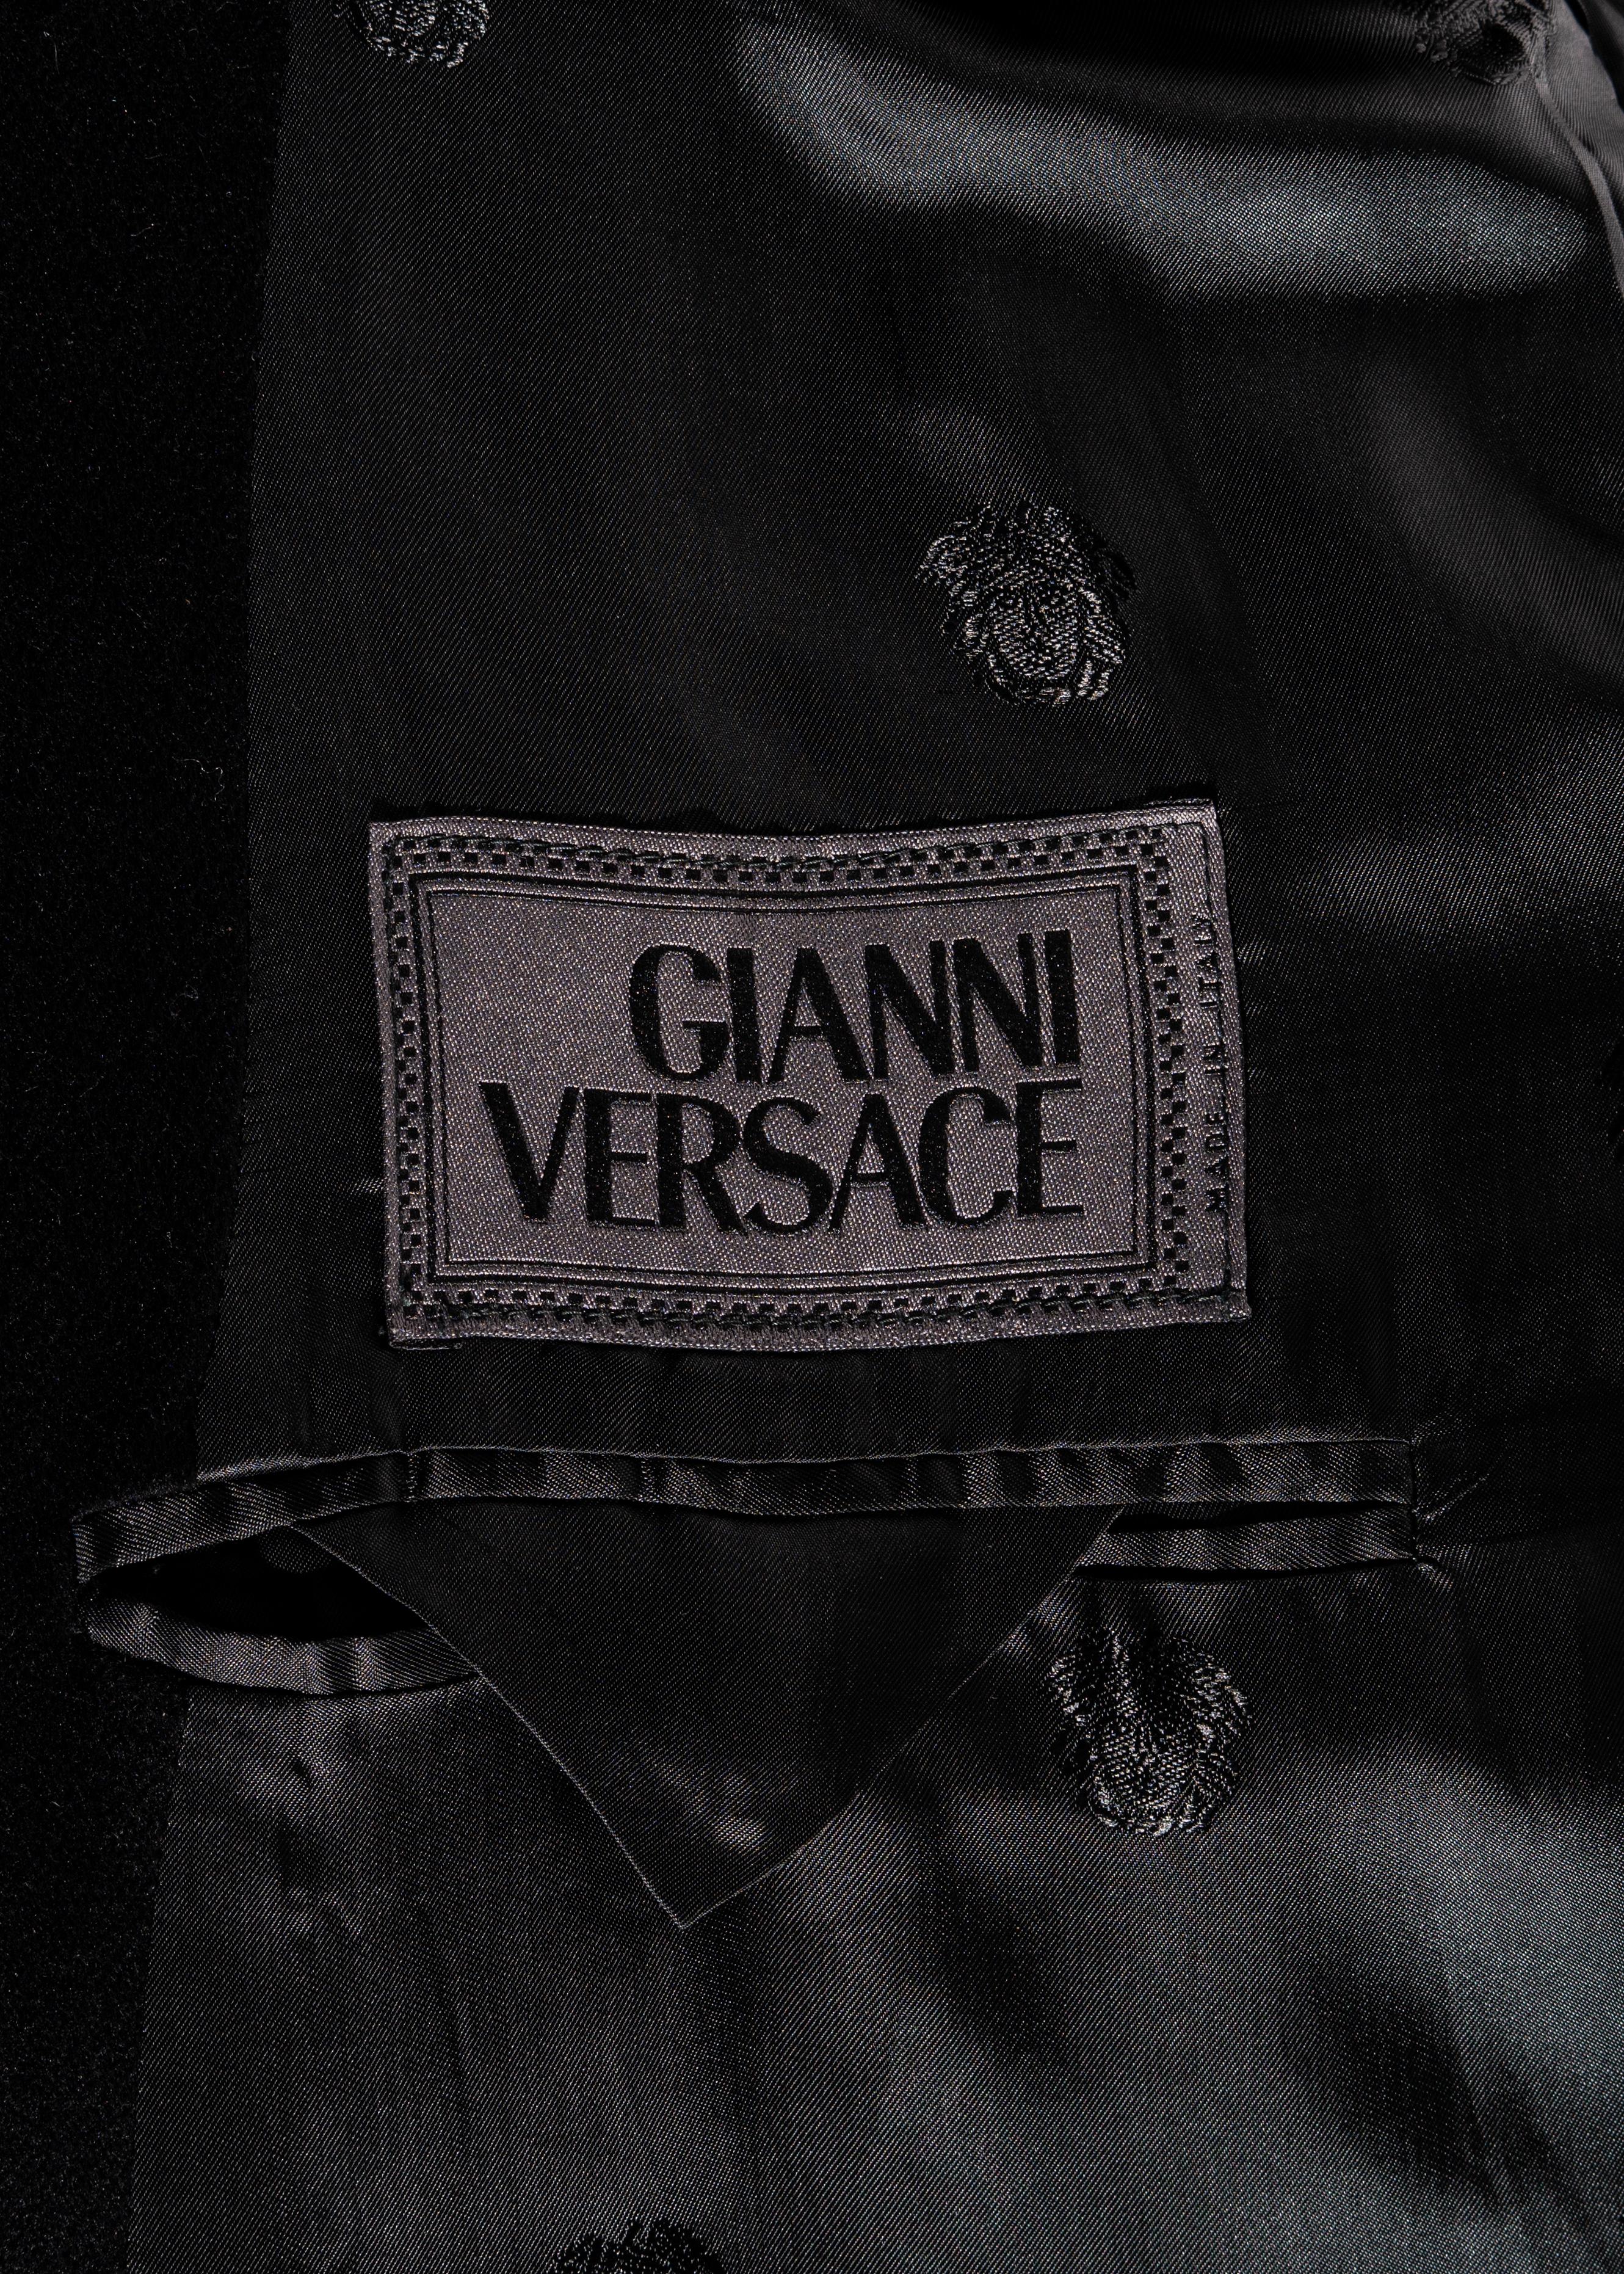 Men's Gianni Versace black cashmere wool oversized coat with fox fur, fw 1999 5